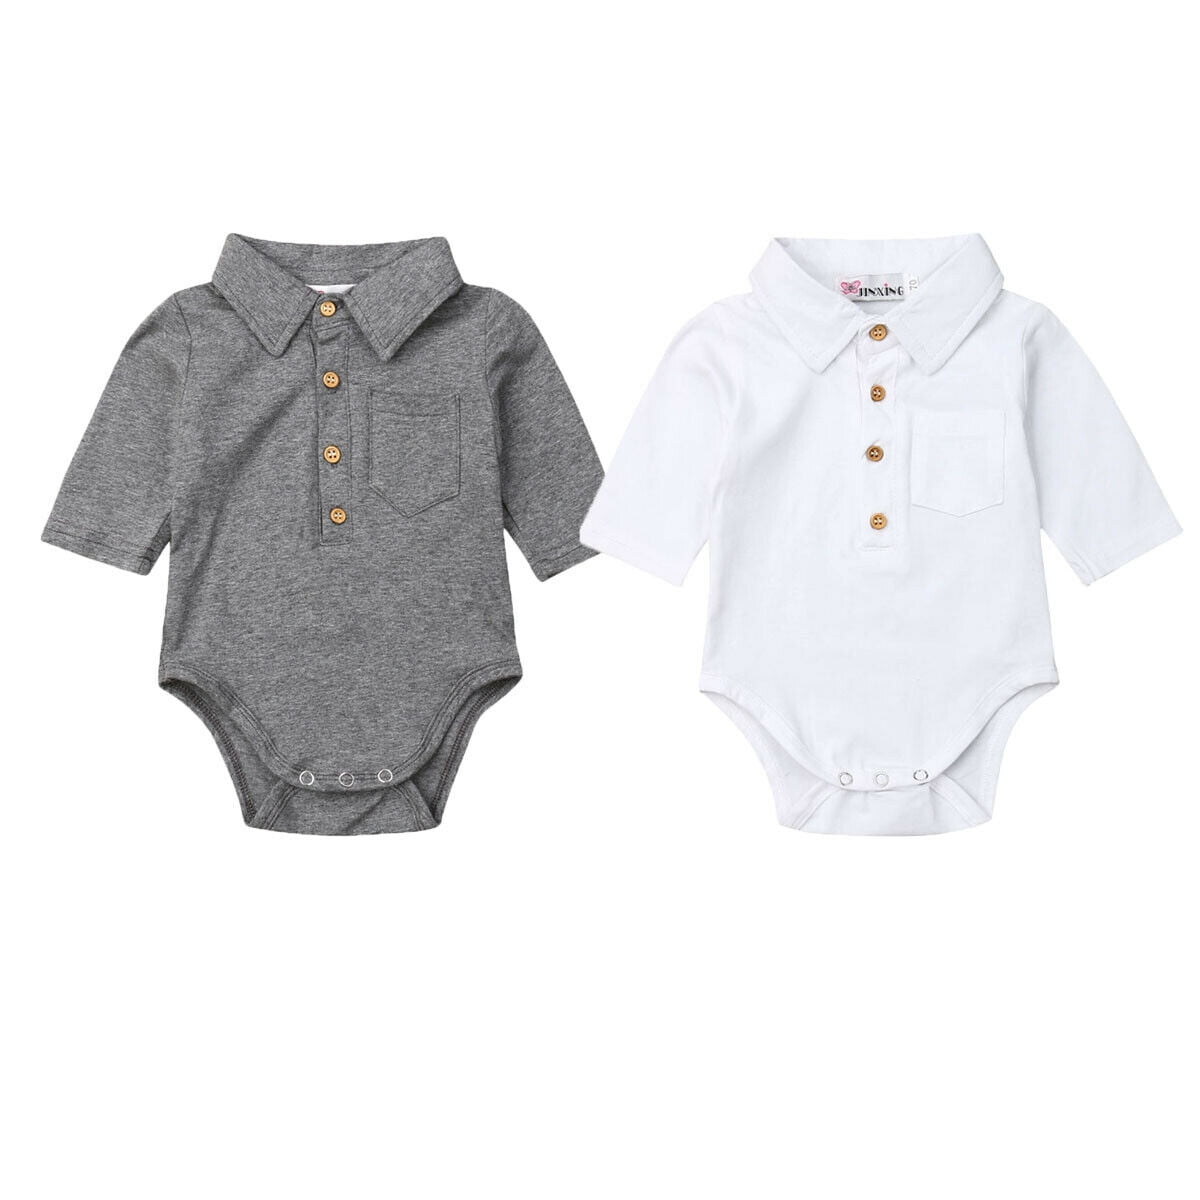 Details about   Newborn Baby Boy Girl Outfit Whale Print Button Romper Jumpsuit Bodysuit Pajamas 